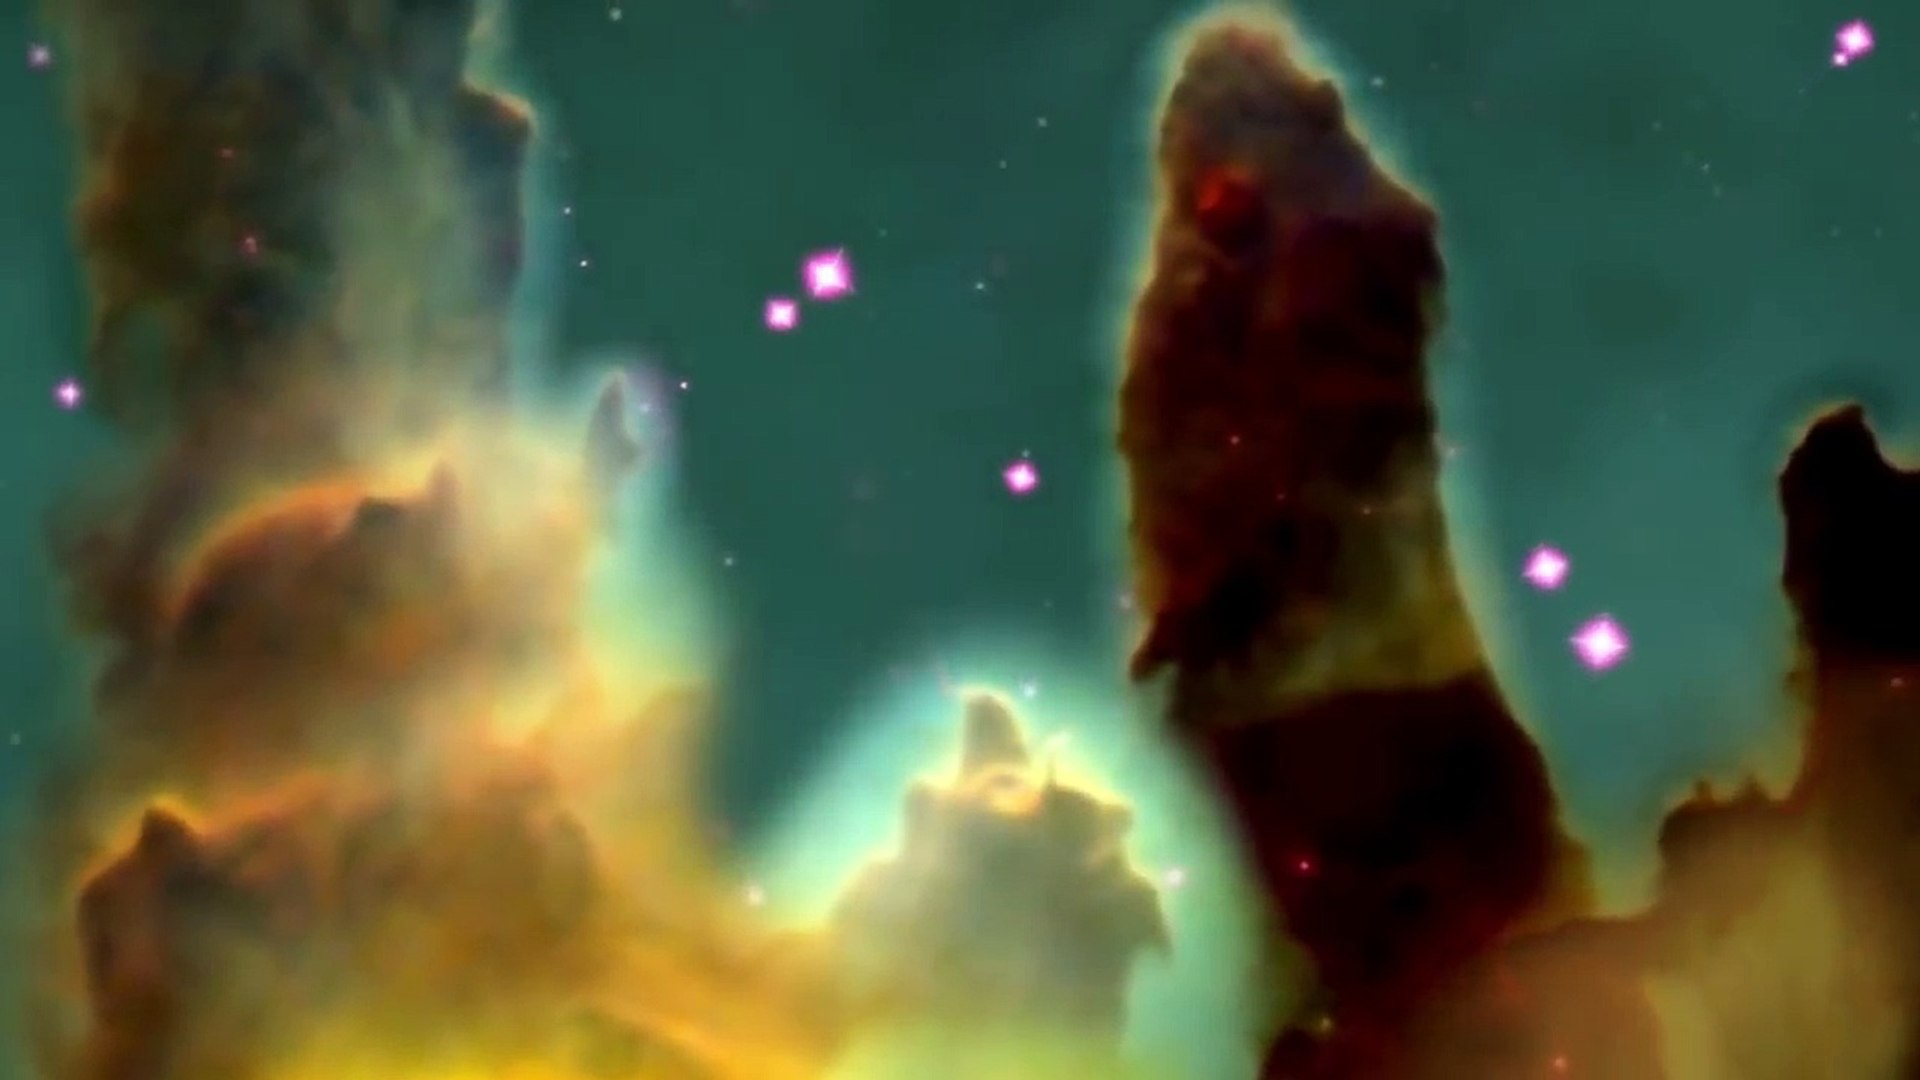 James Webb Telescope - Space Documentary 2018 part 1/2 - video ...